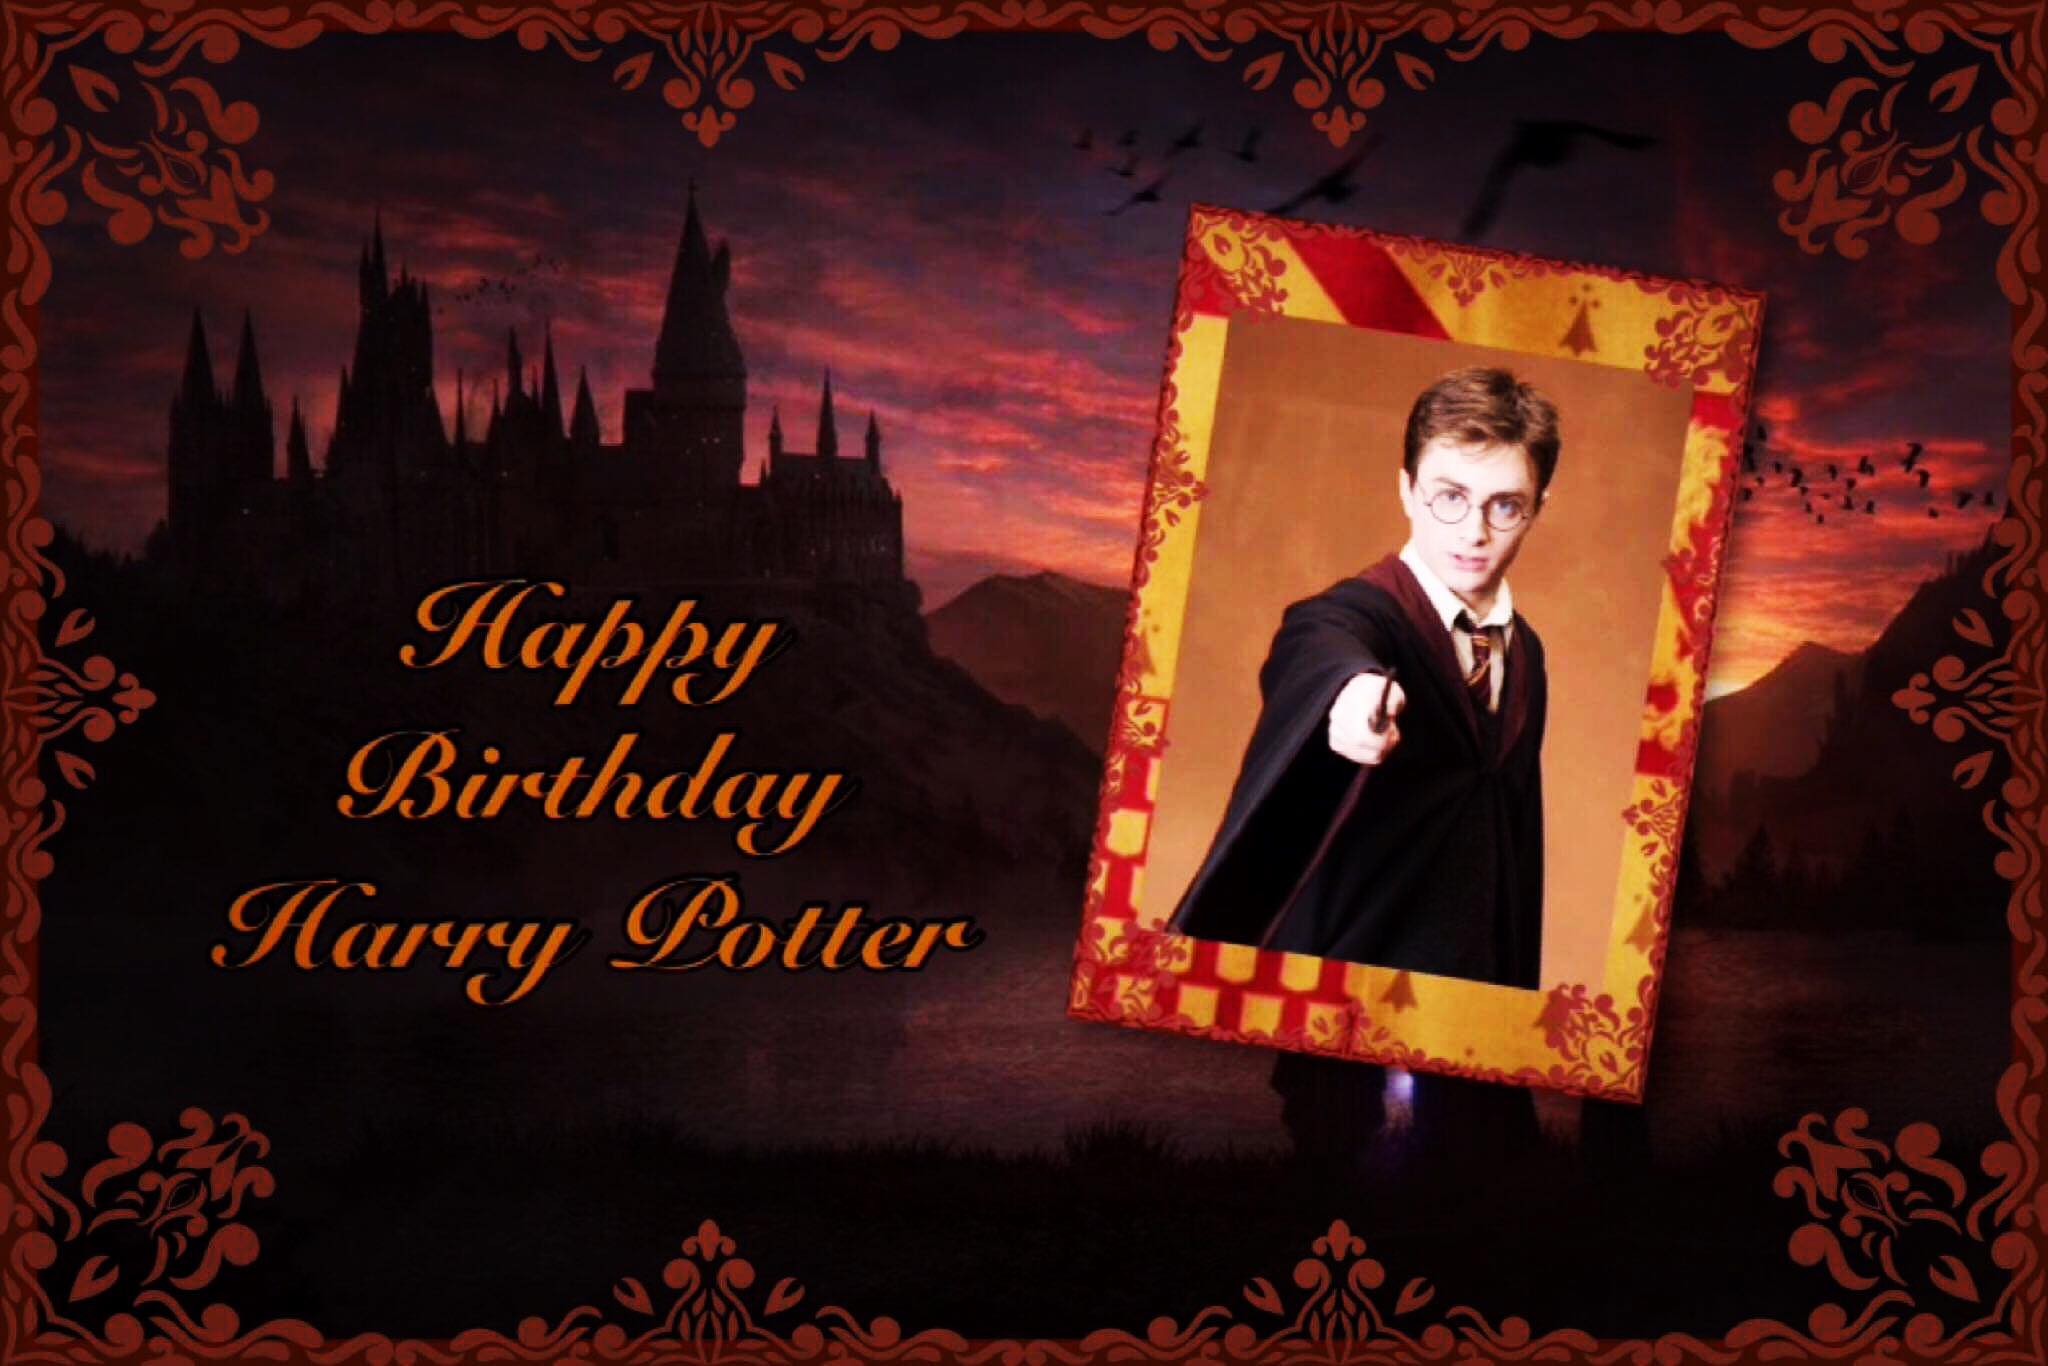  Happy Birthday Harry Potter                